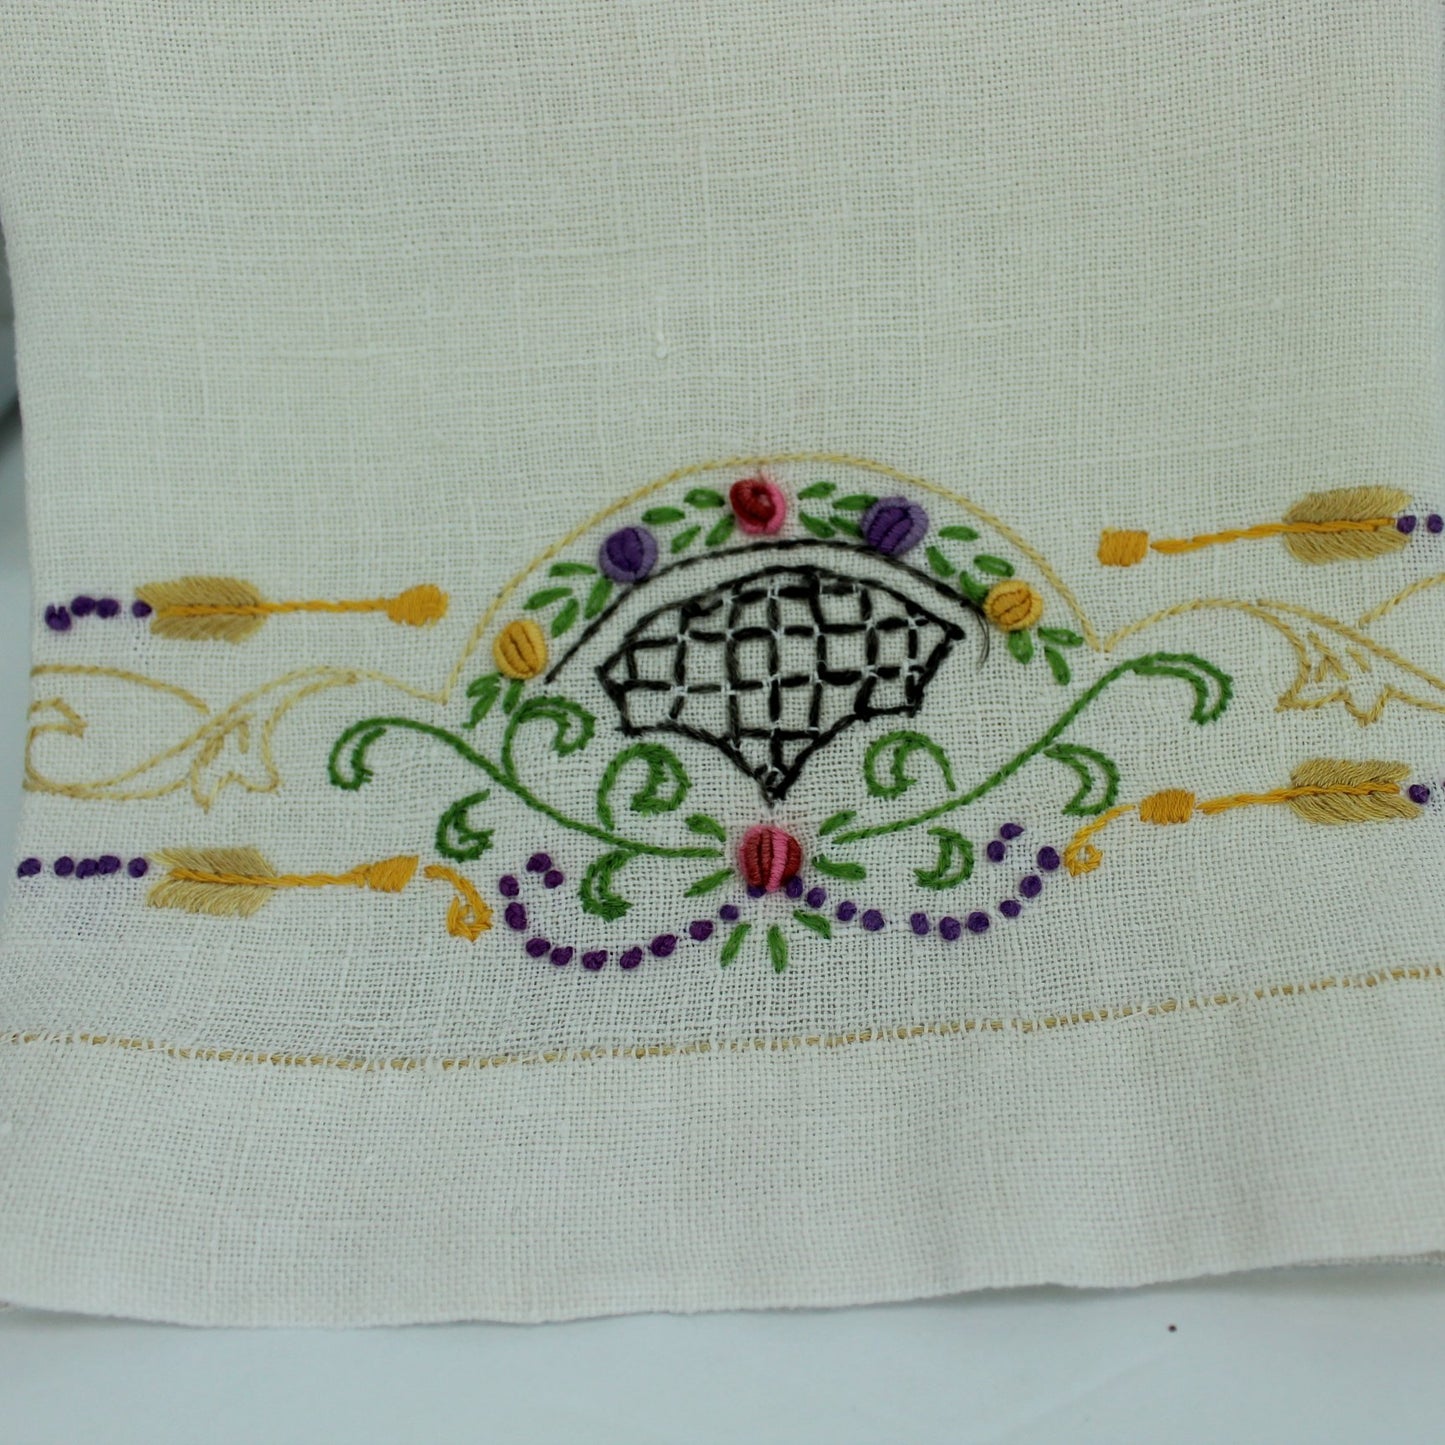 Pair Vintage Linen Hand Towels Exquisite Dimensional Embroidery 1940s closeup design 2nd towel